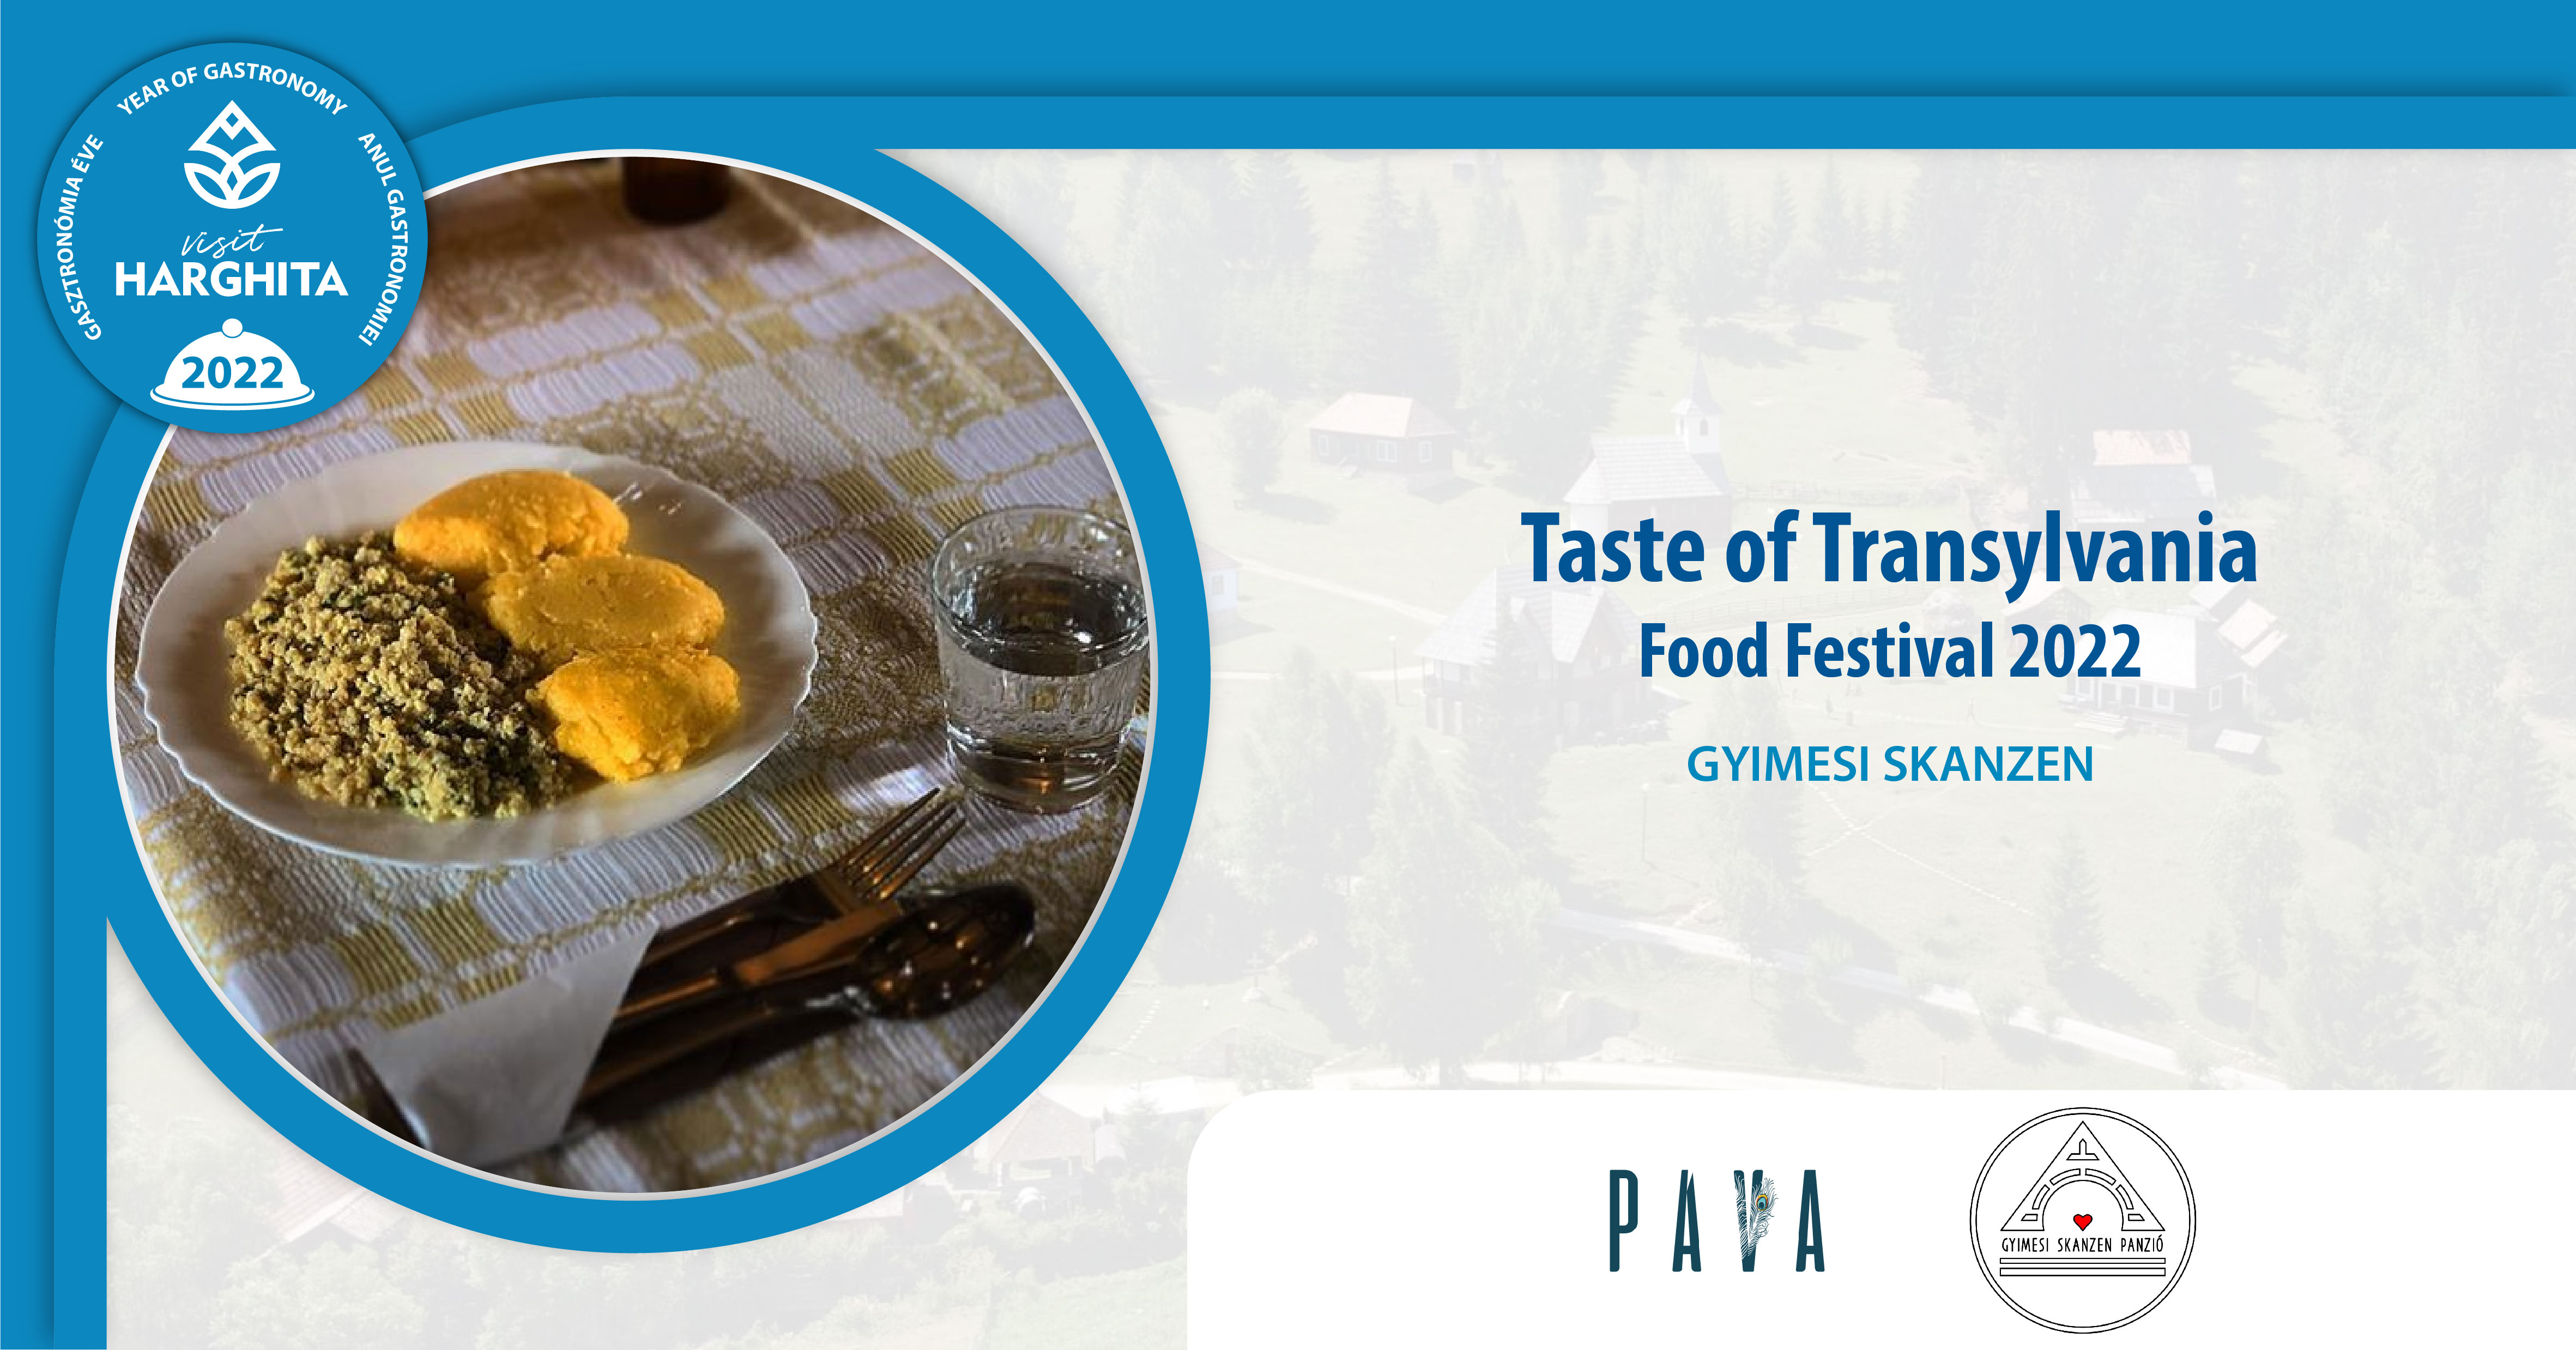 Taste of Transylvania Food Festival 2022